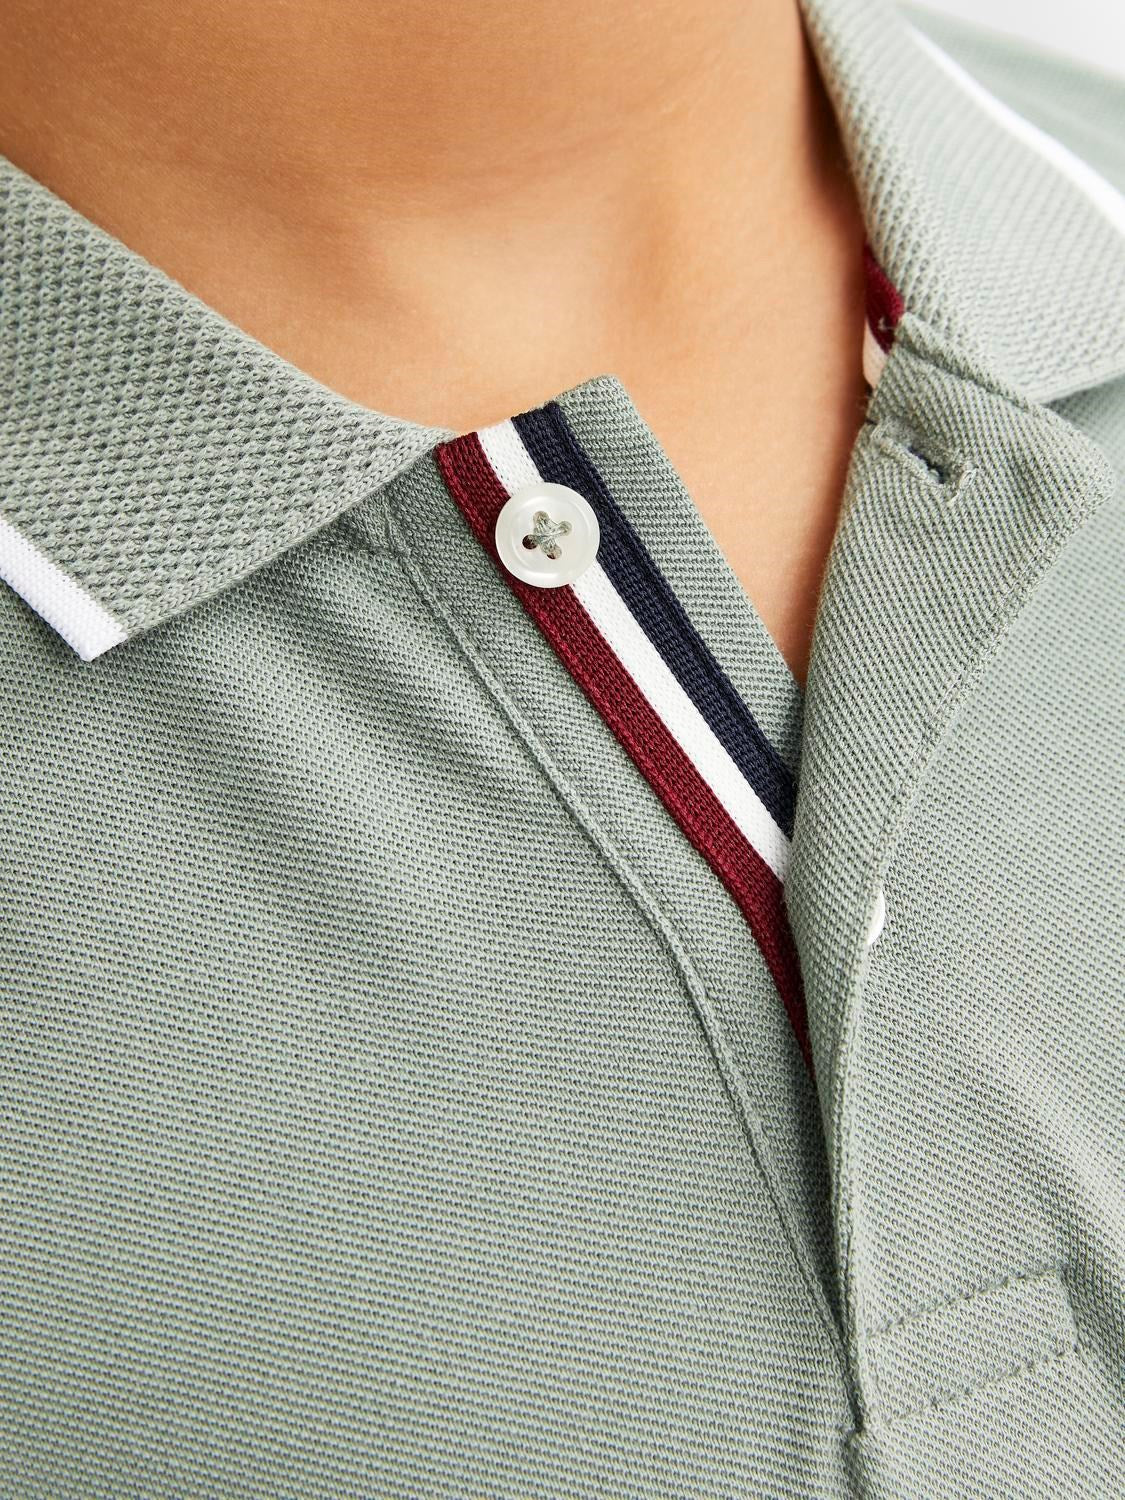 Shield Junior Boy Lily Pad Polo Shirt-Collar detail